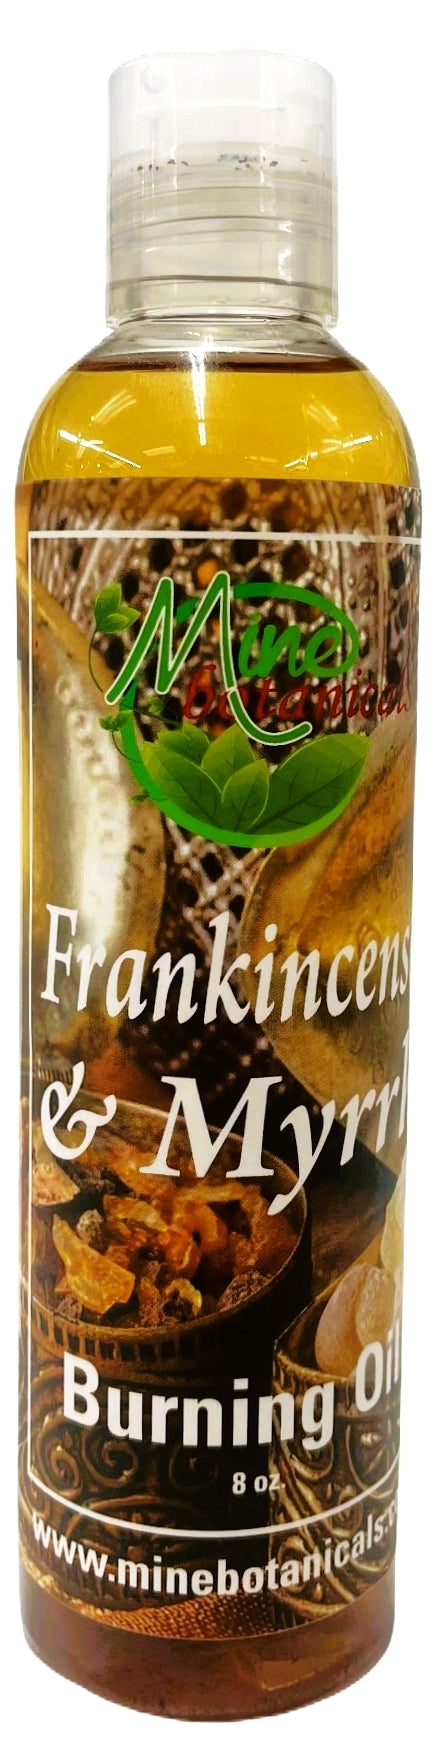 Frankincense & Myrrh Burning Oil